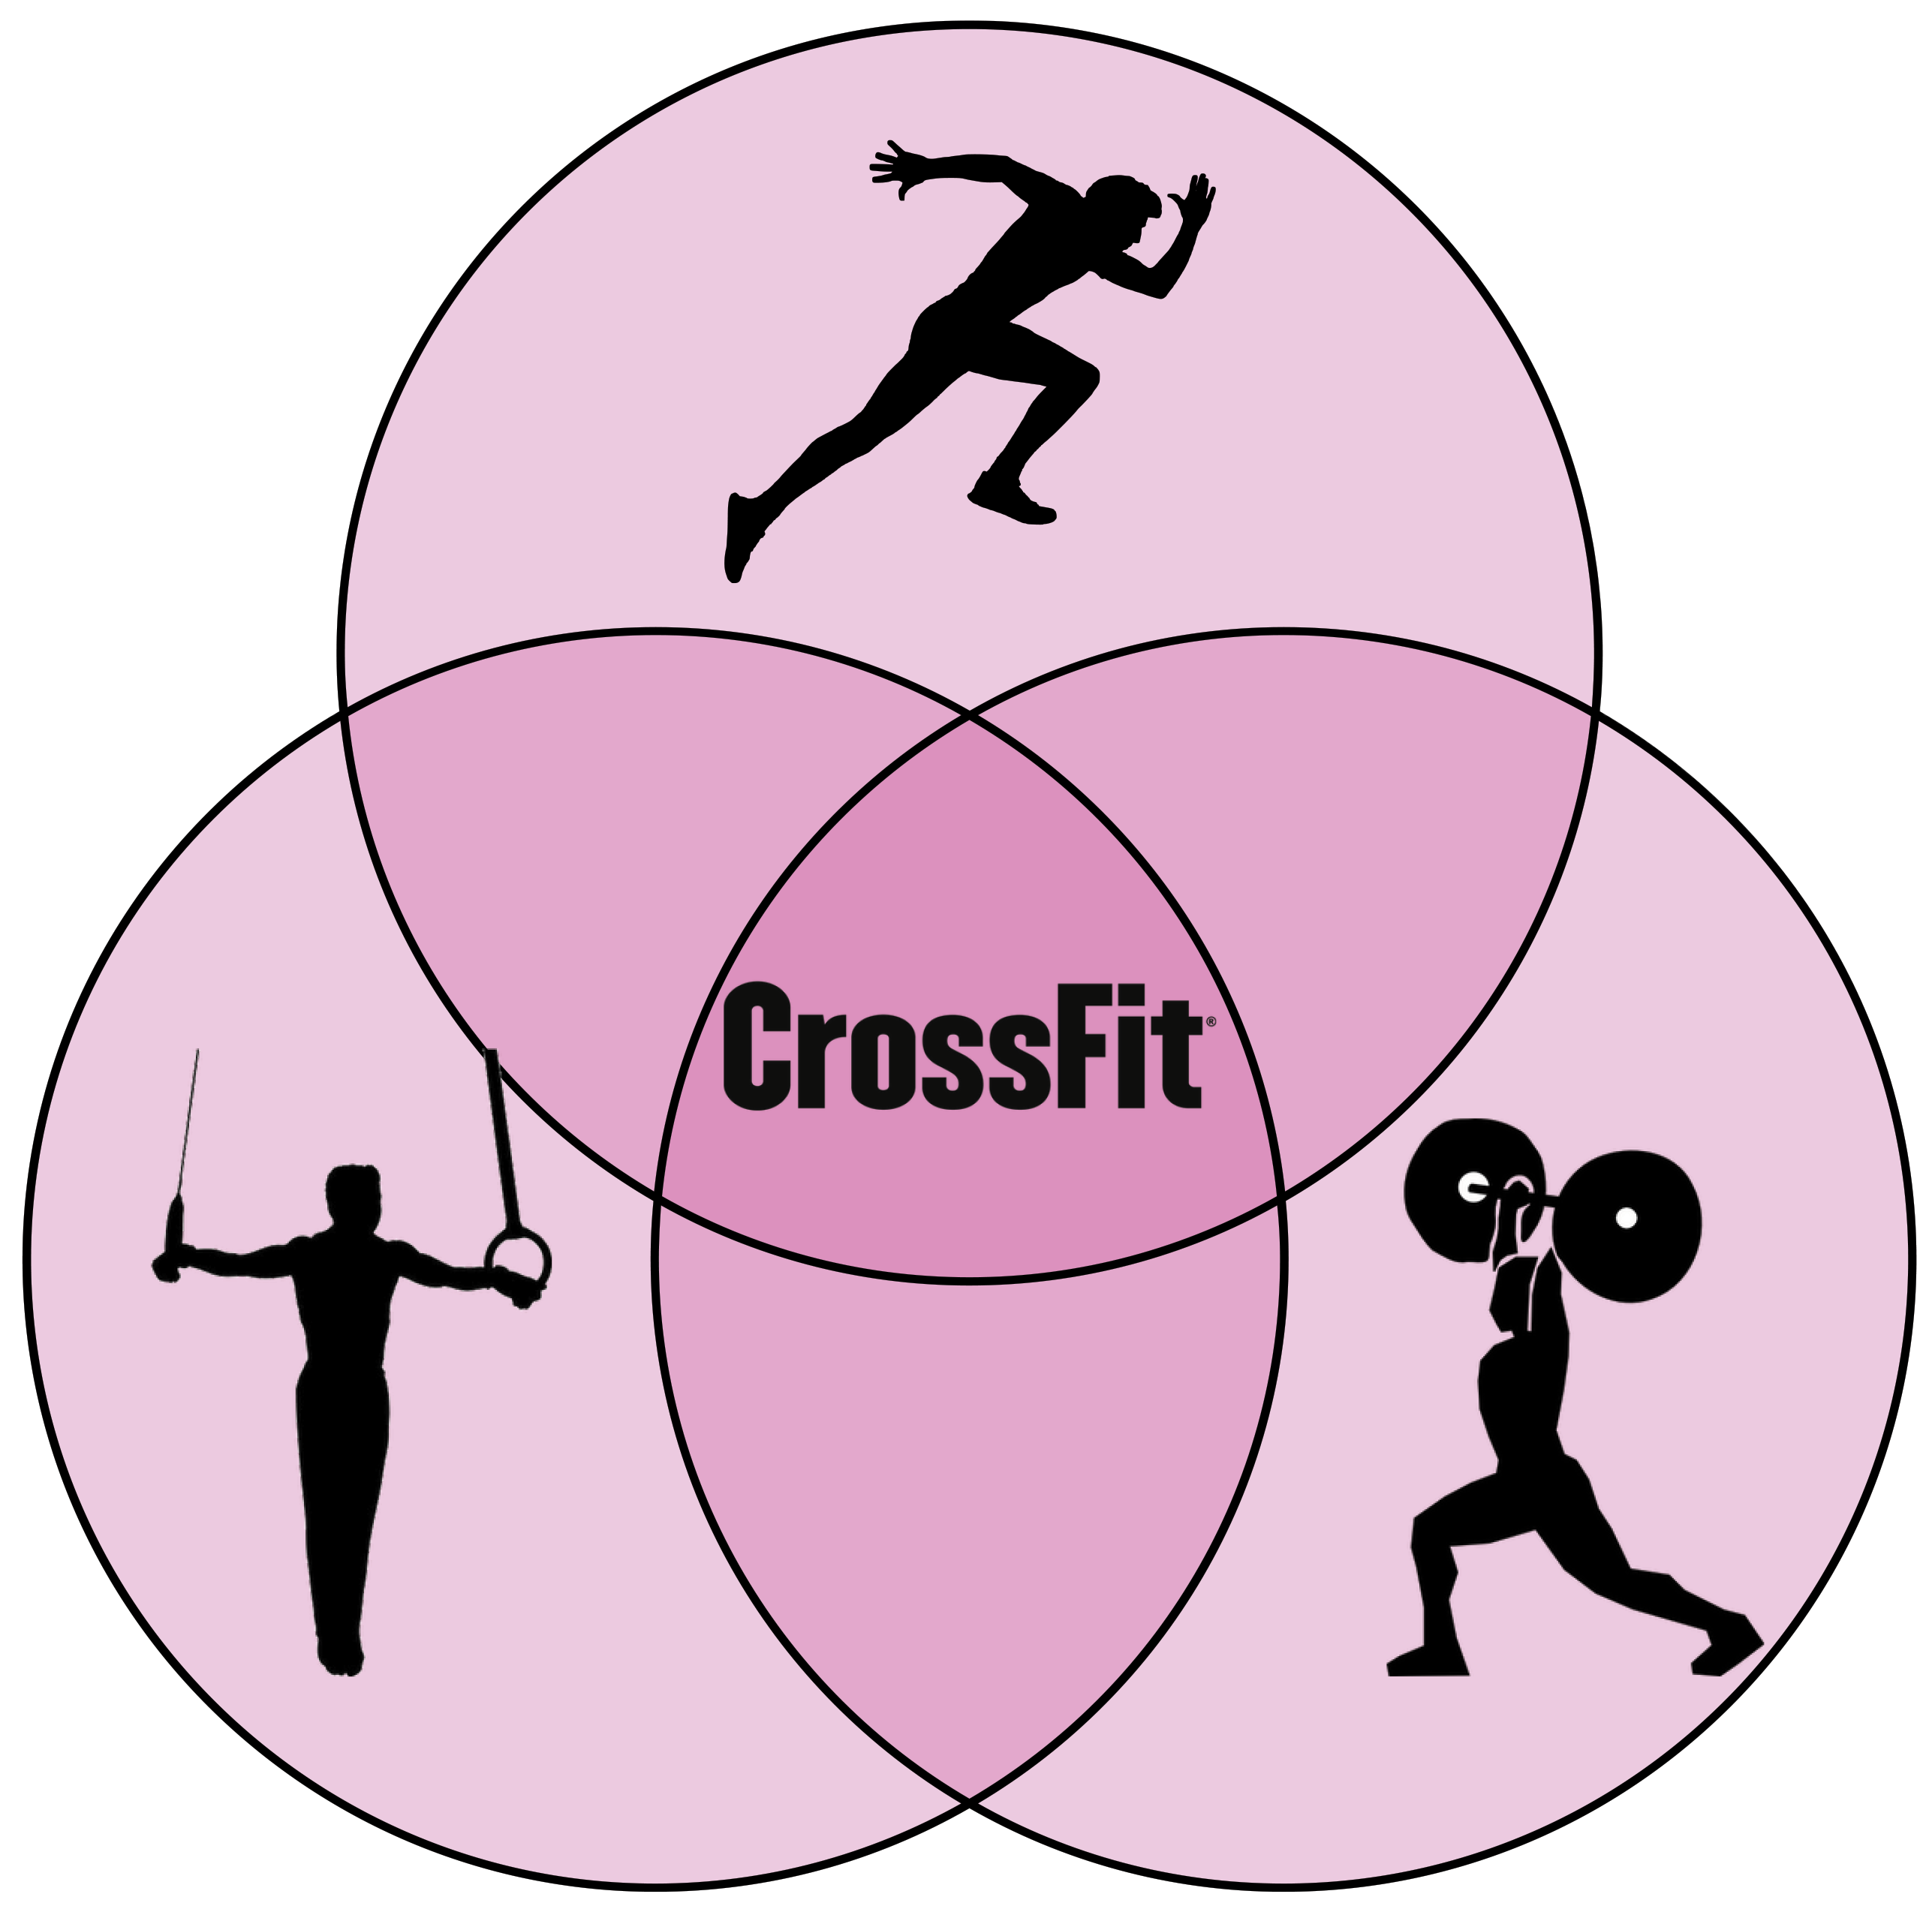 CrossFit exercises